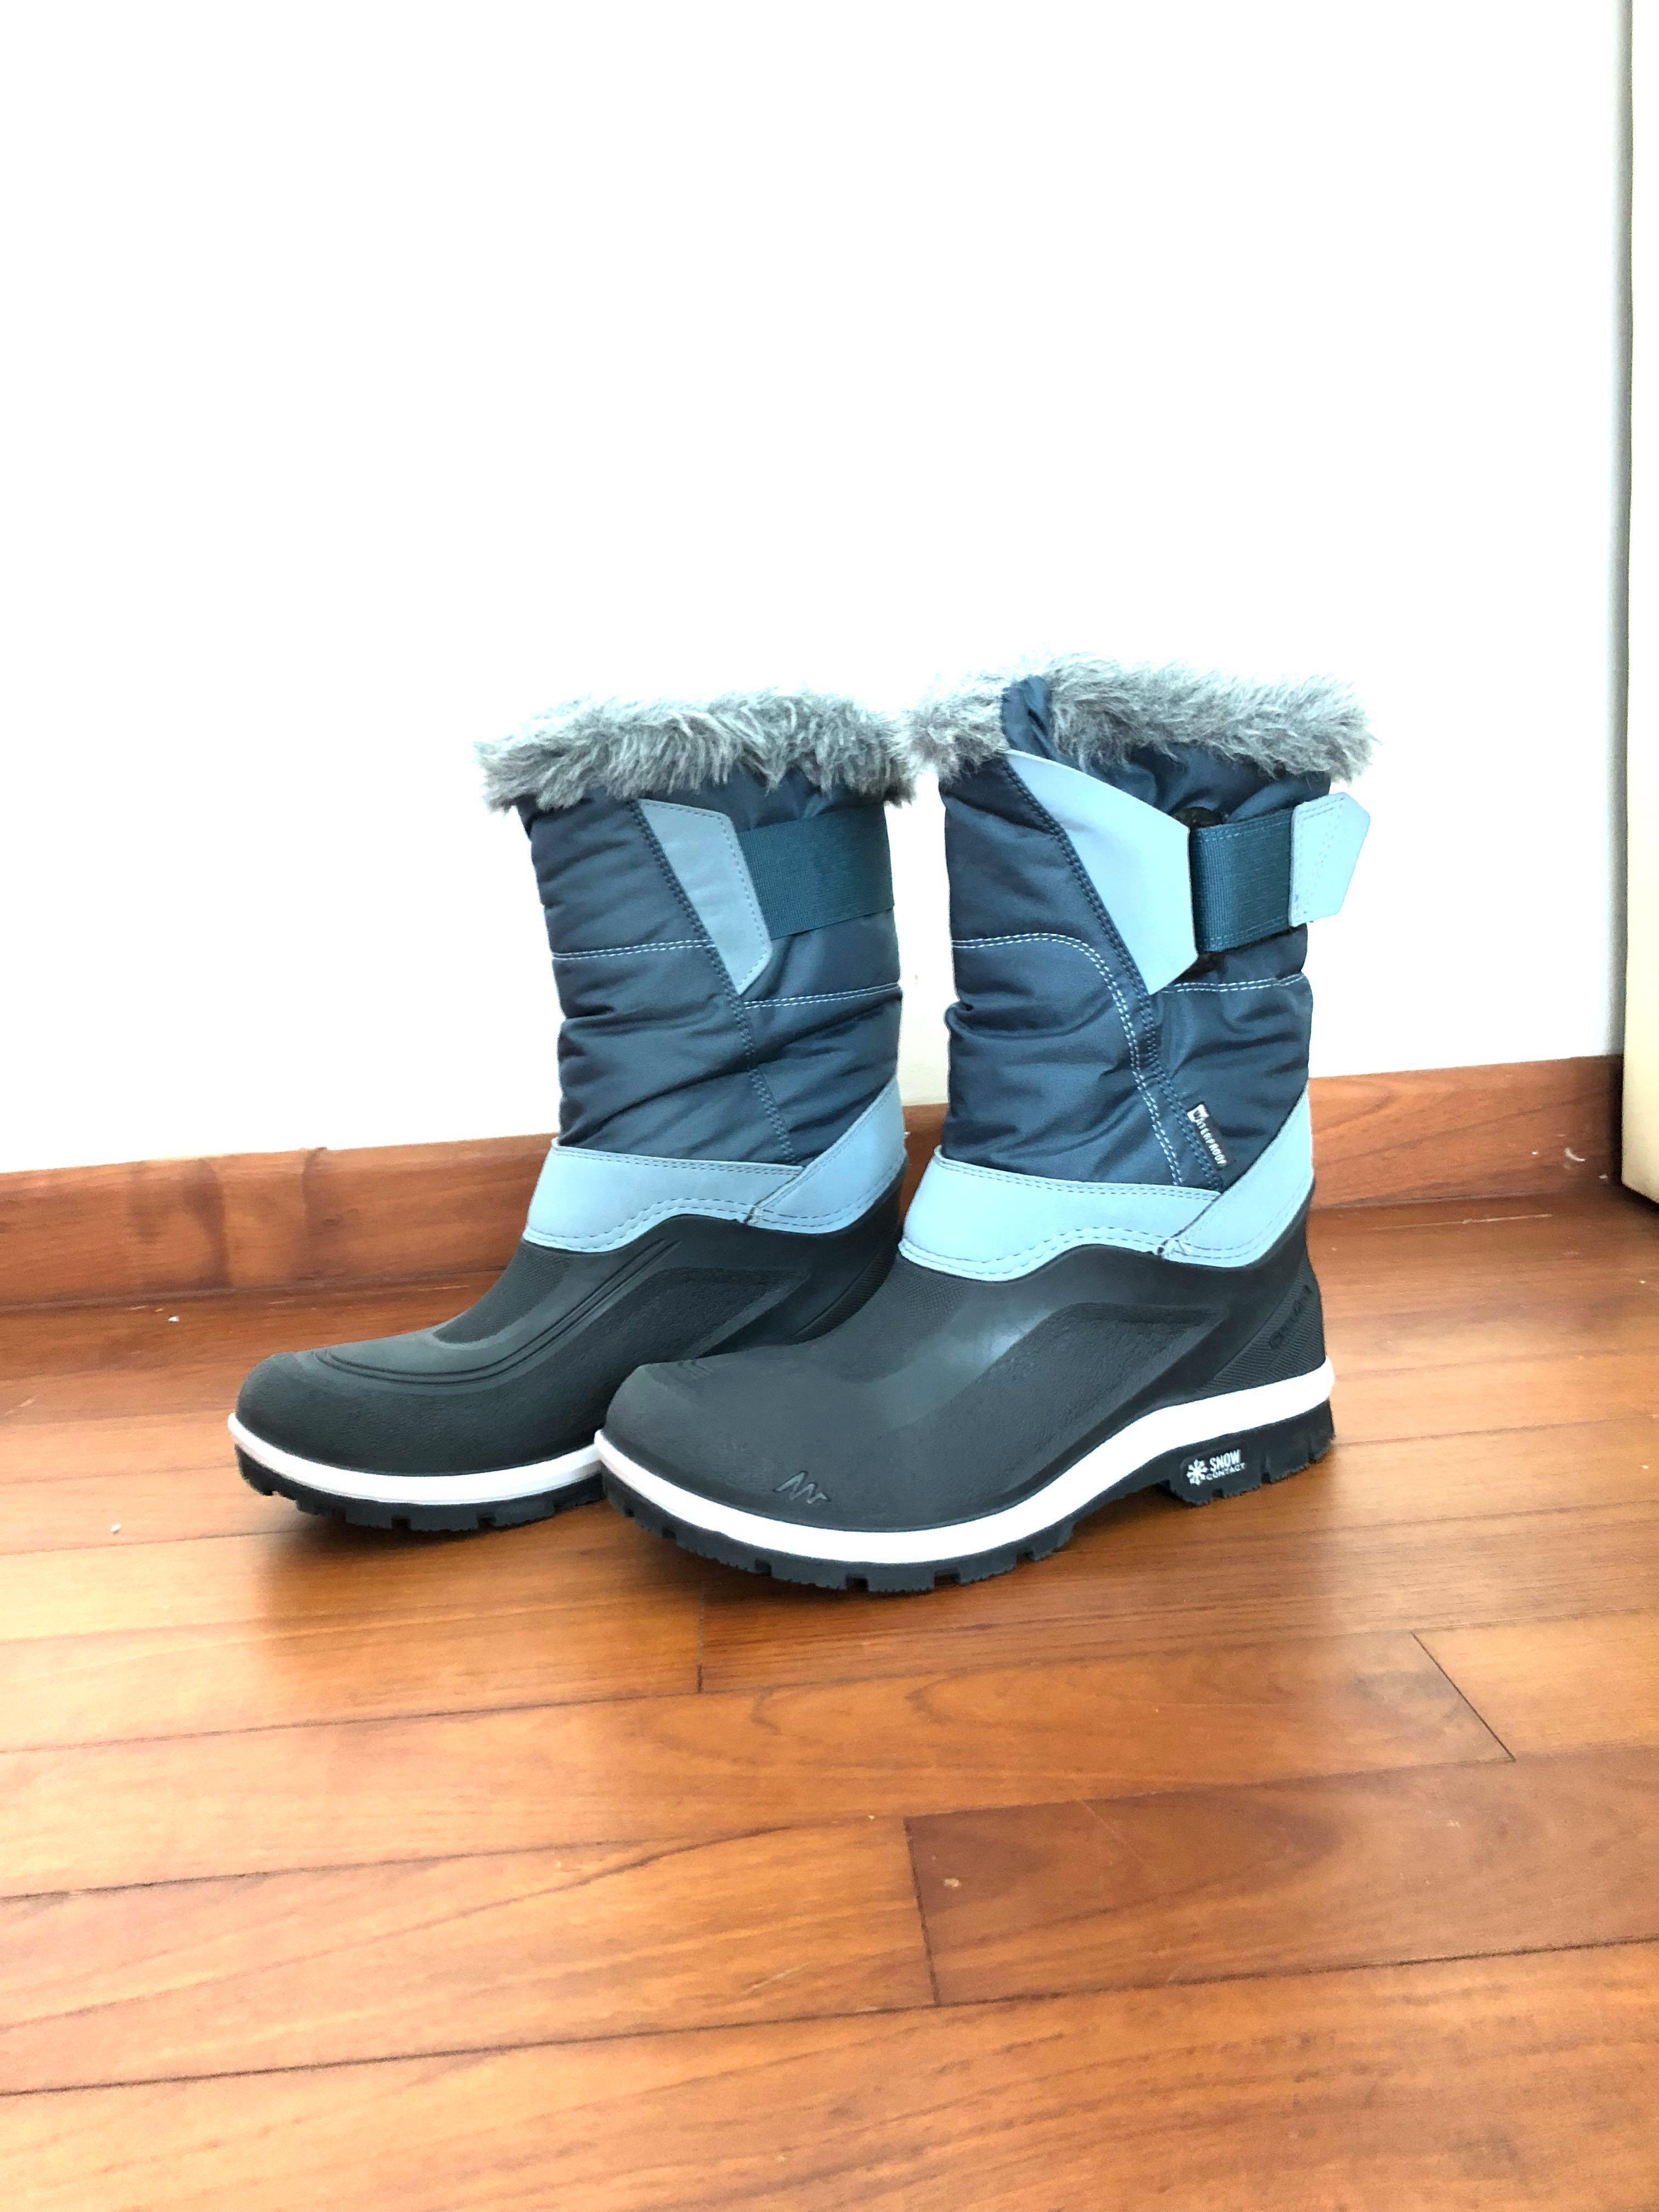 decathlon winter boots